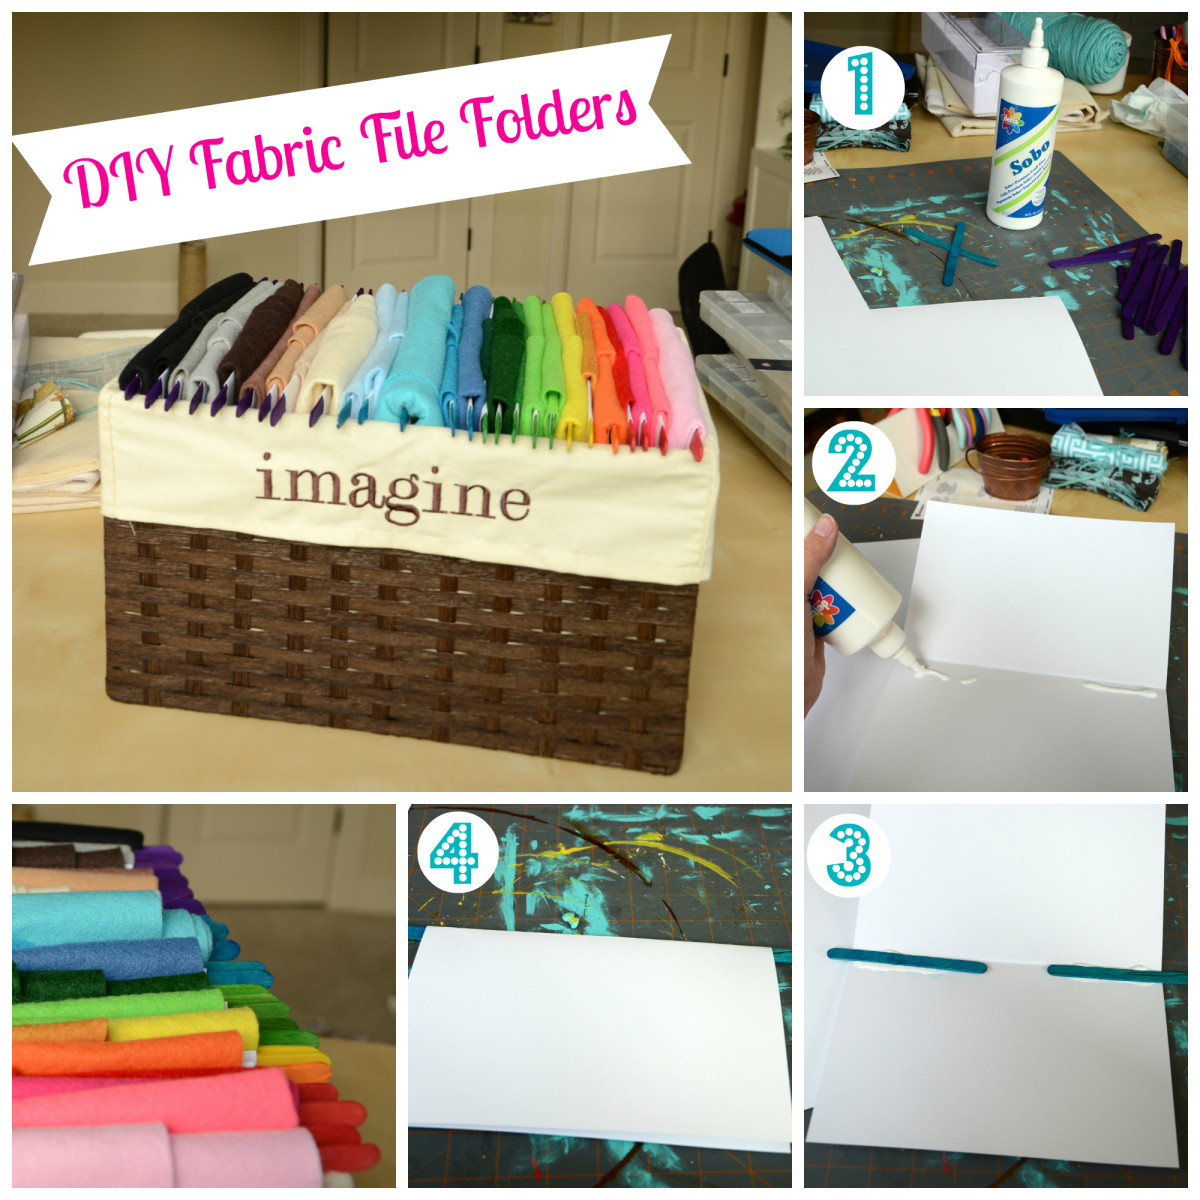 Best ideas about DIY File Folder Organizer
. Save or Pin DIY Fabric File Folders Now.